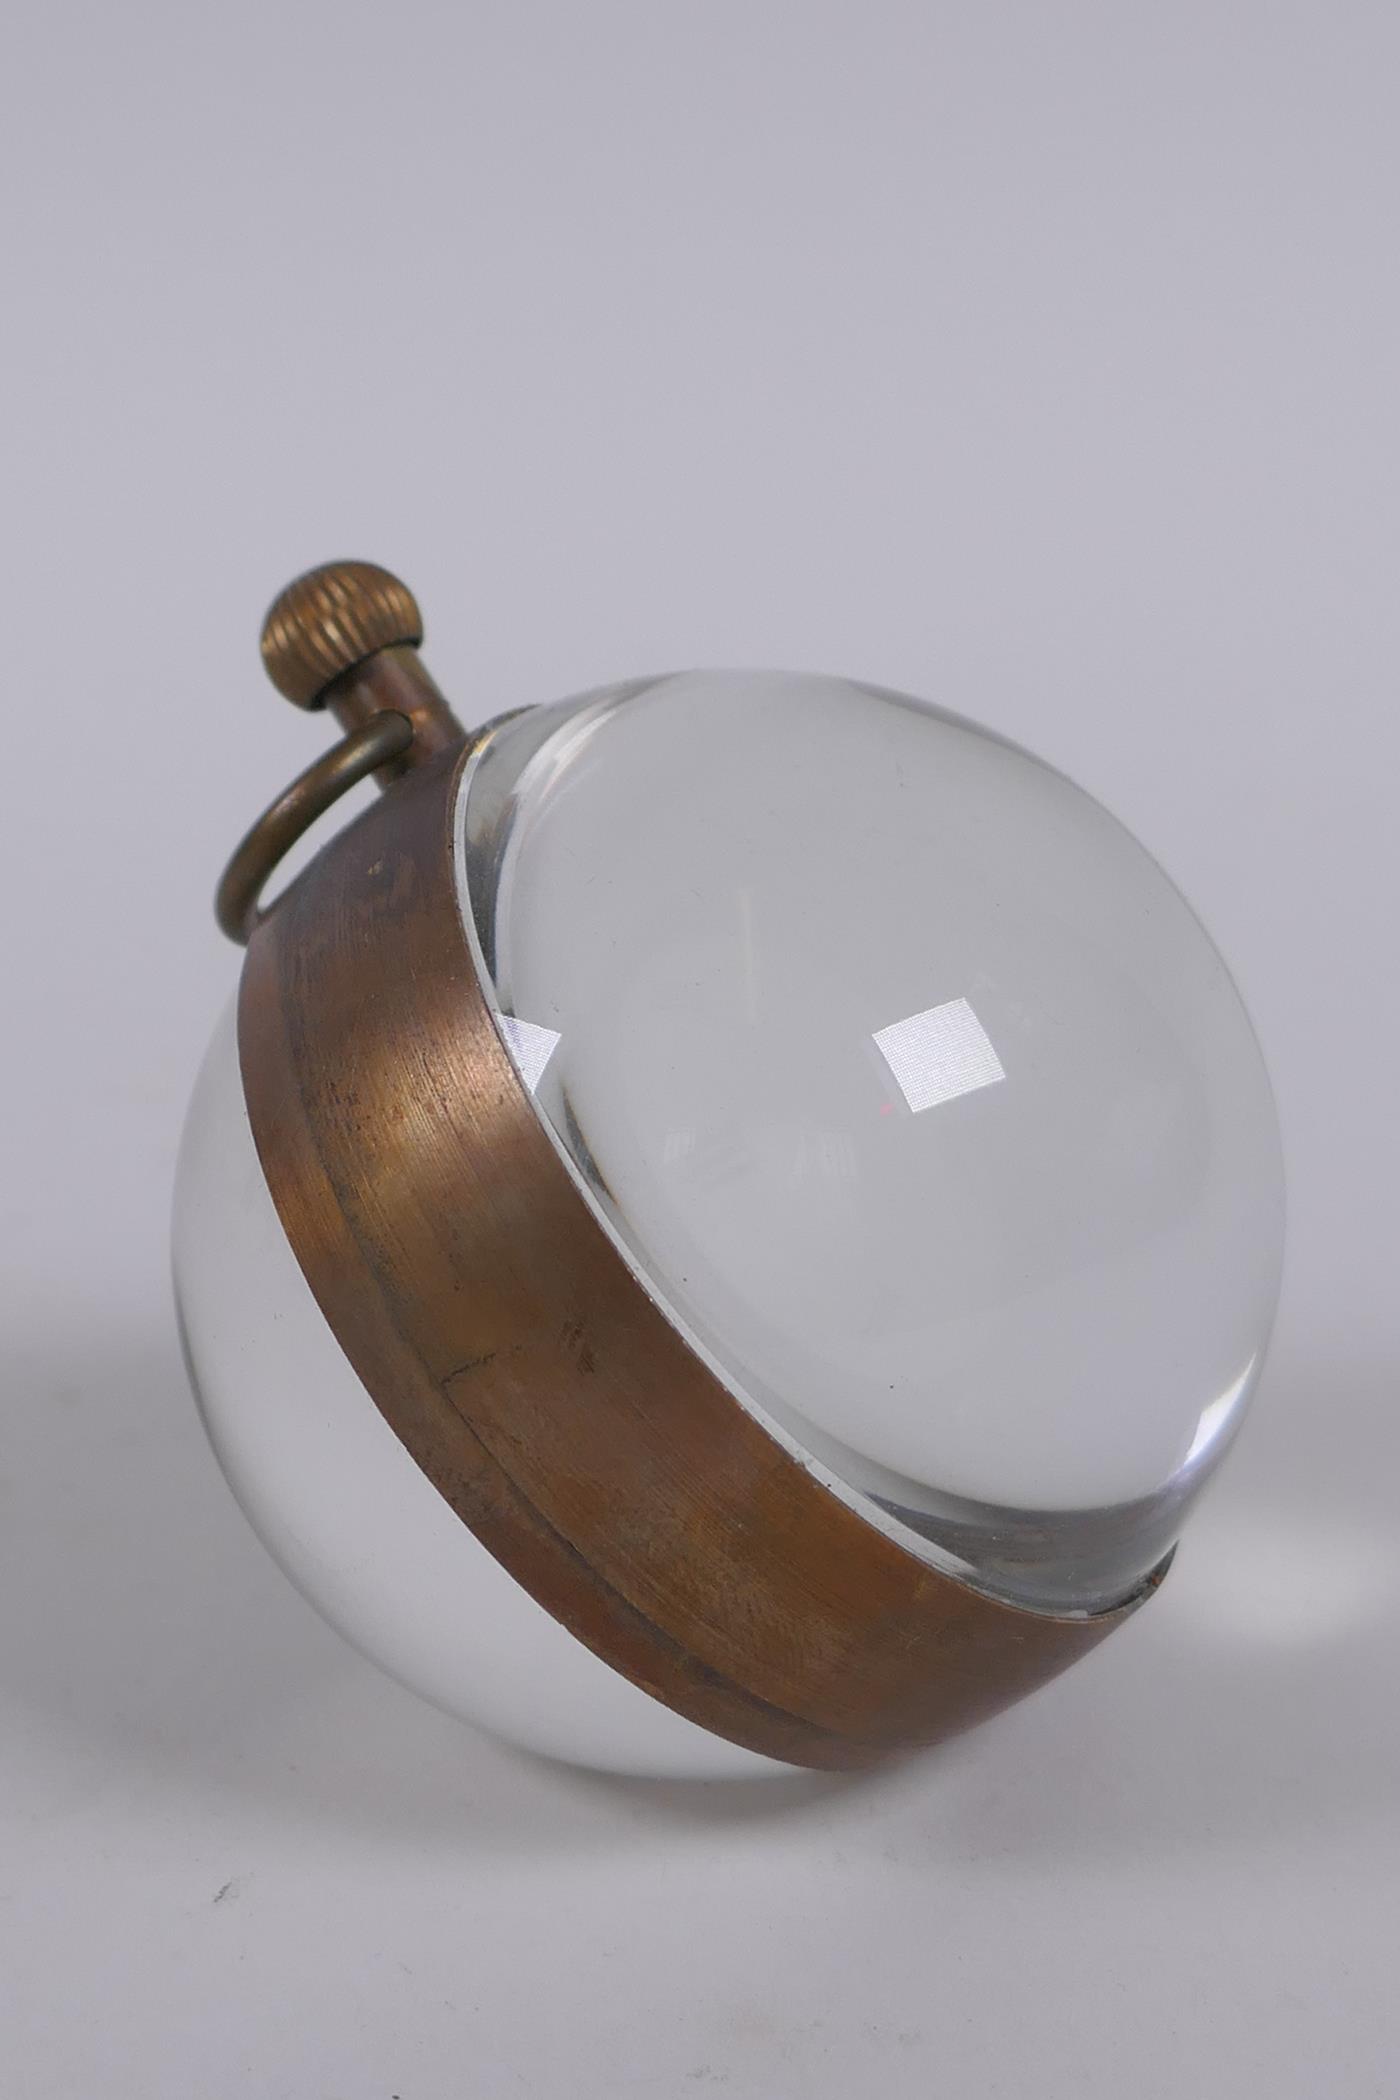 A brass and glass ball desk clock, 6cm diameter - Image 2 of 4